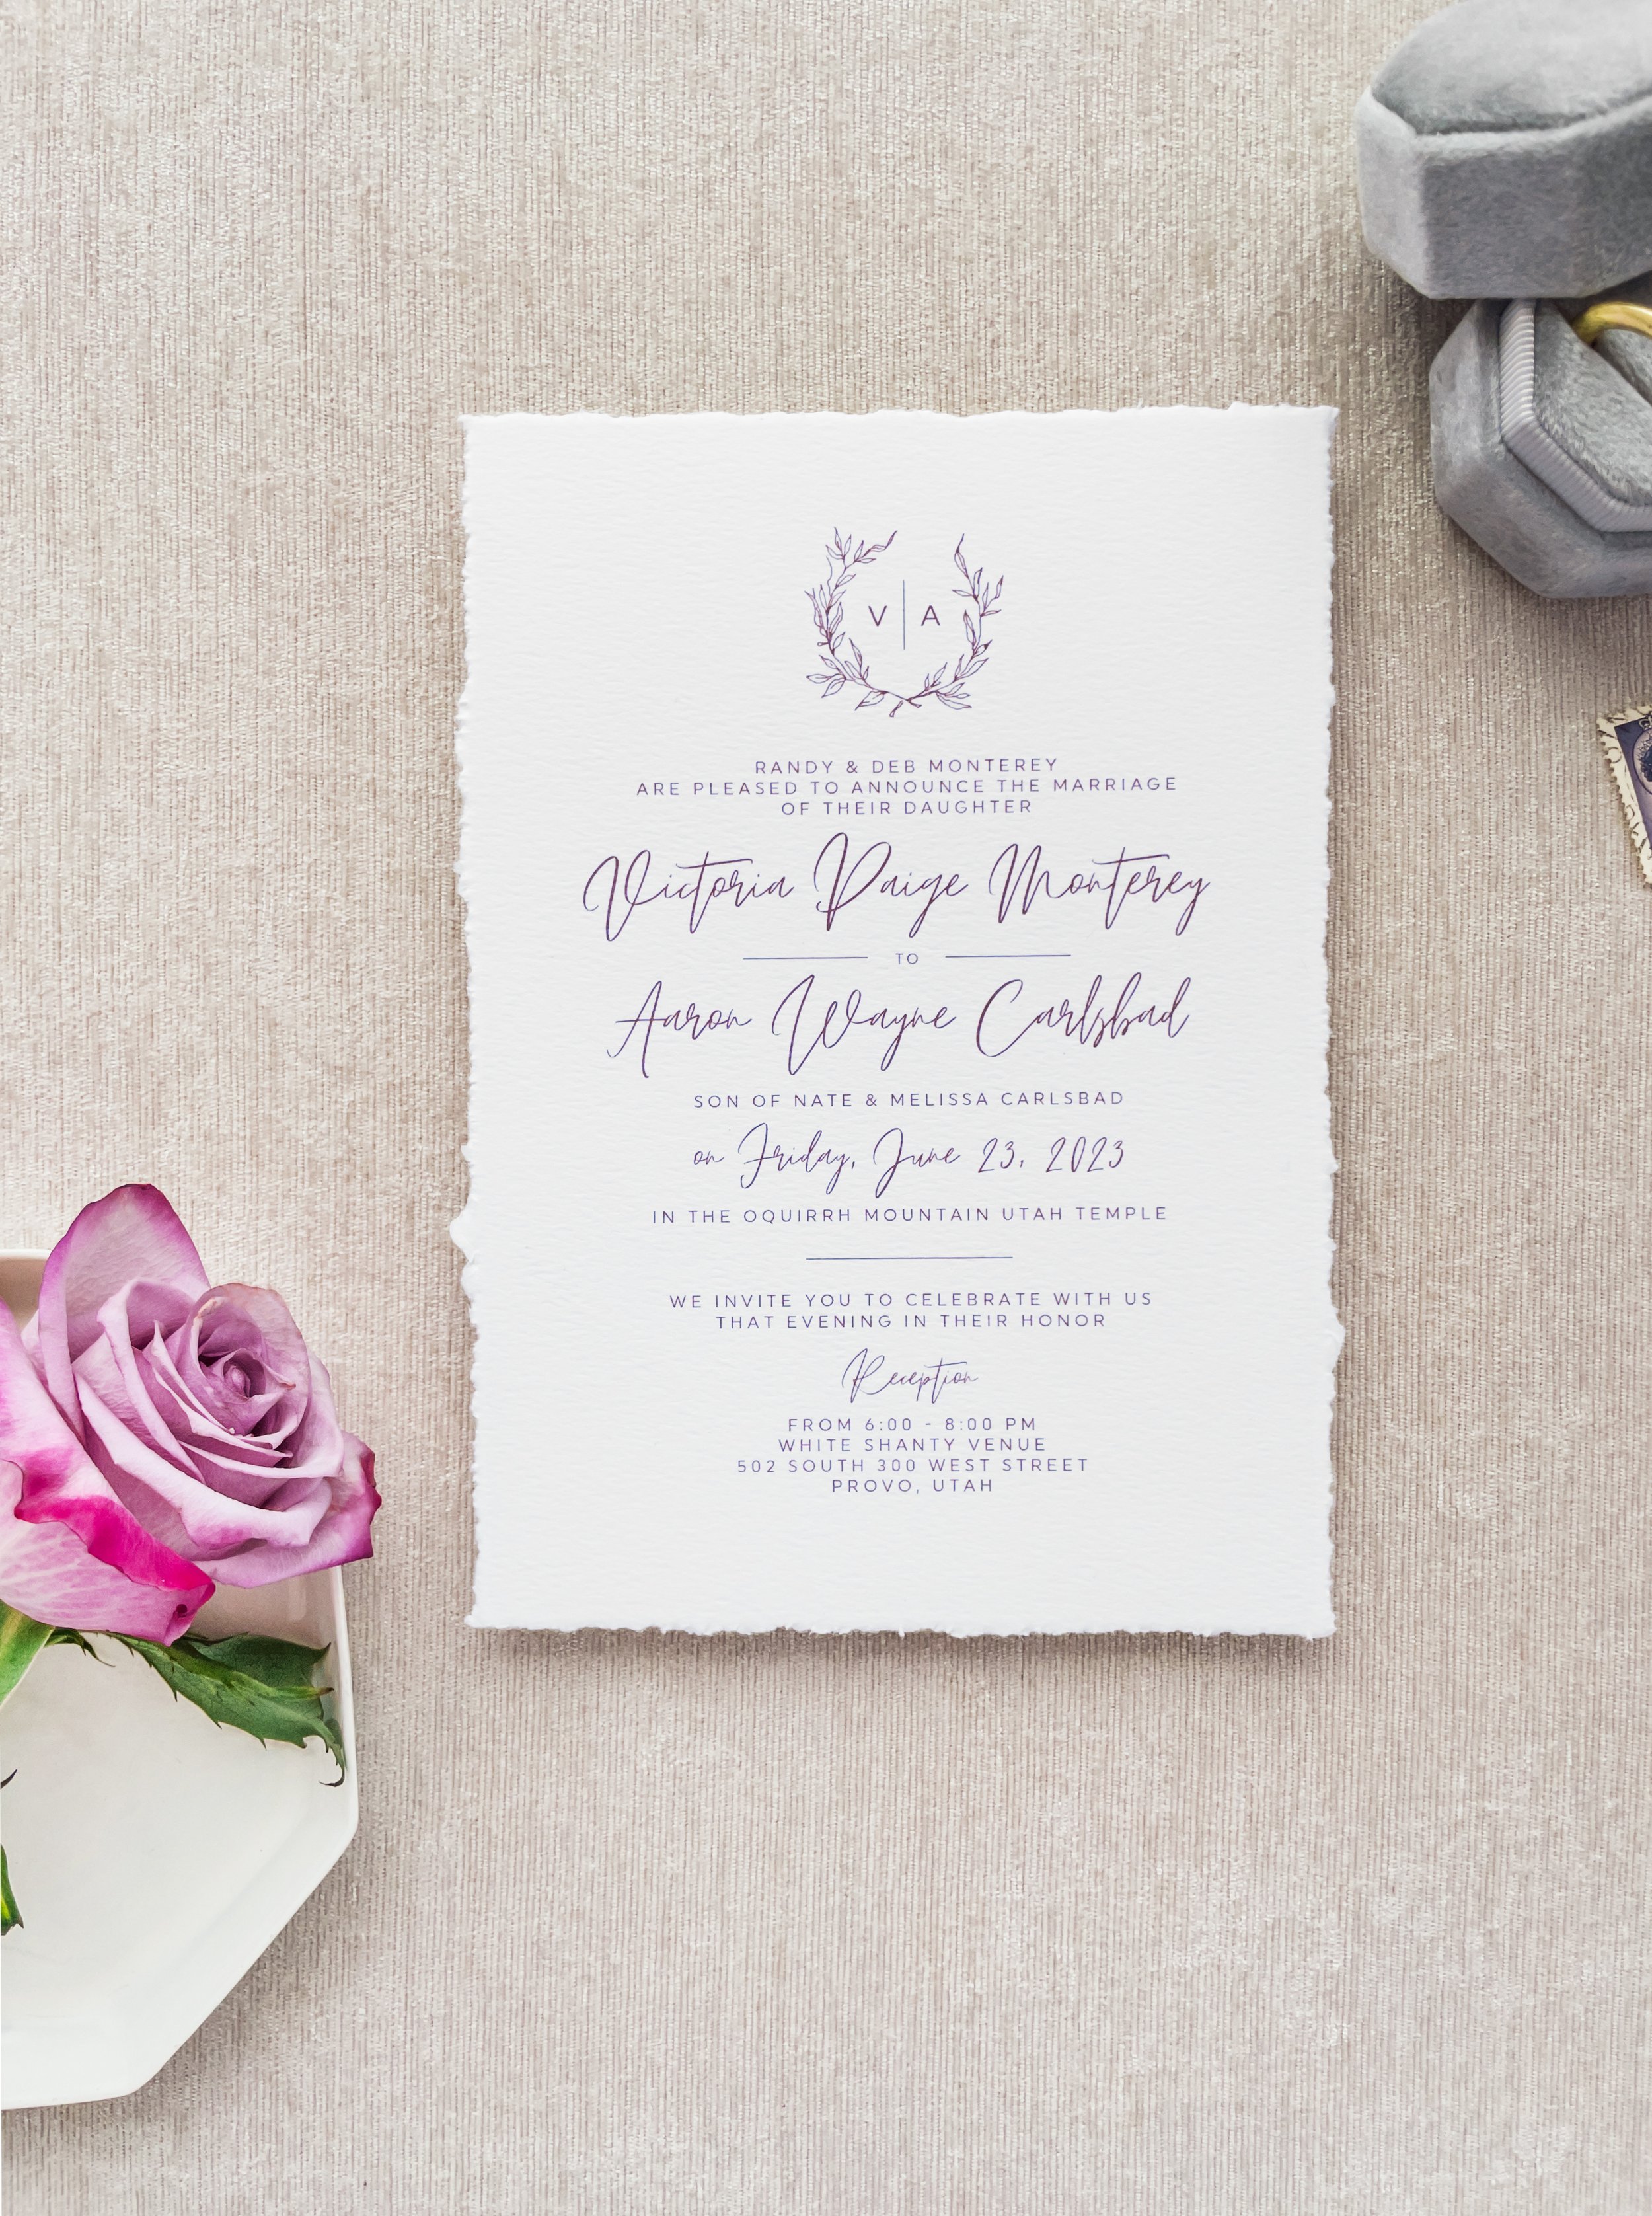 Anthology Print Wedding Invitations - Floral Wedding Invitations - Garden wedding invitations - custom wedding invitations - Utah wedding invitations - White Shanty Utah Wedding Venue4.jpg